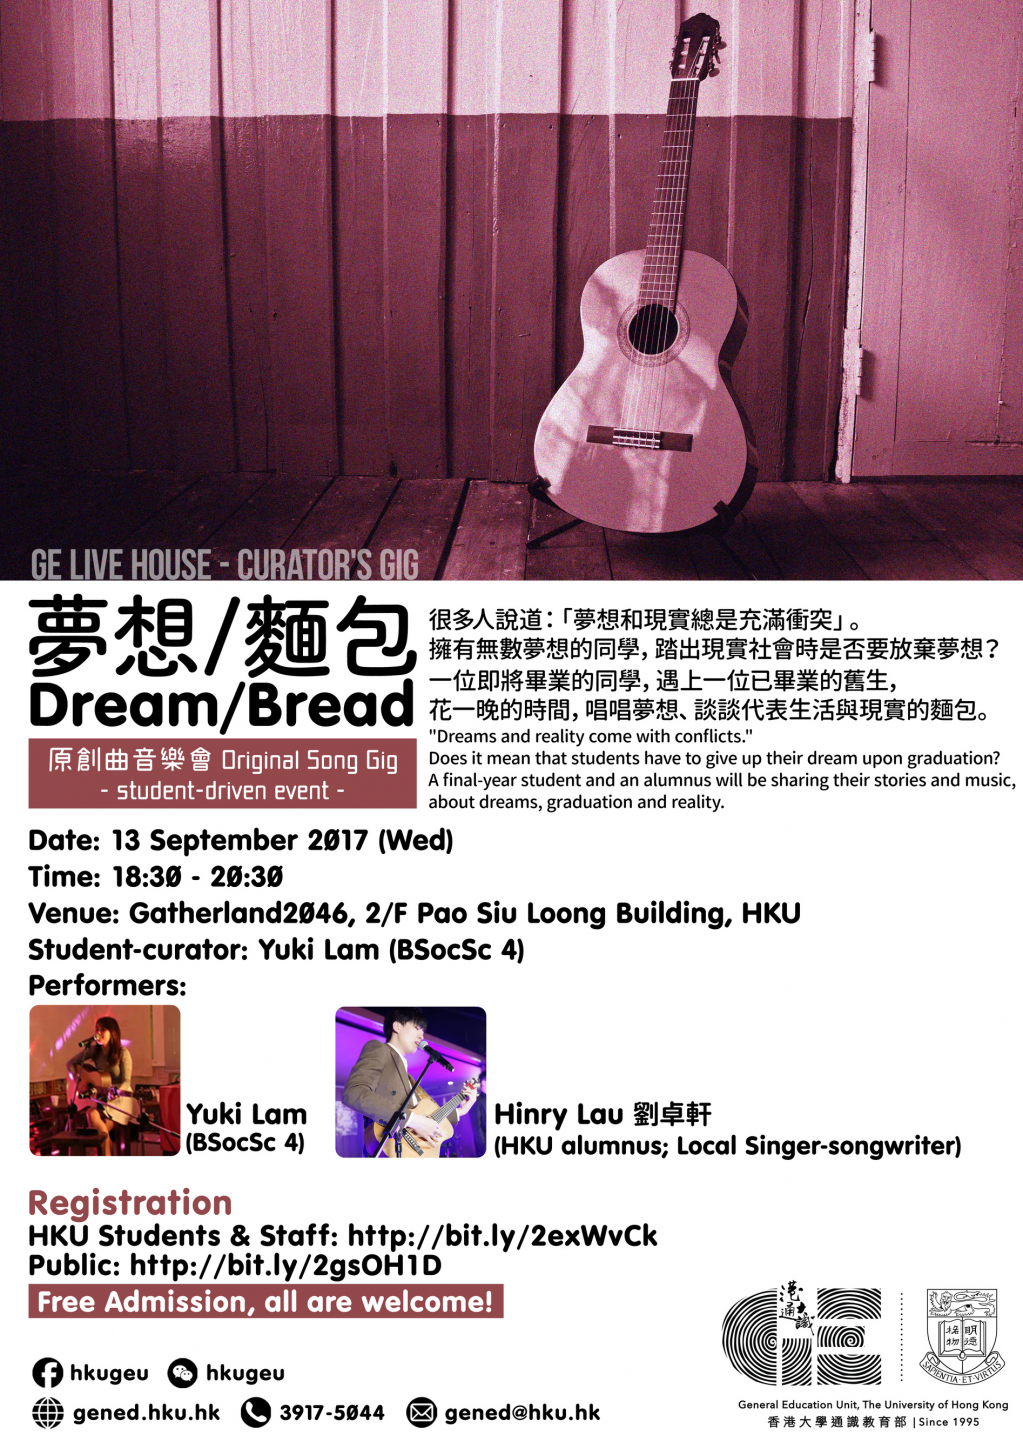 GE Live House - Curator's Gig | 夢想/麵包 Dream/Bread